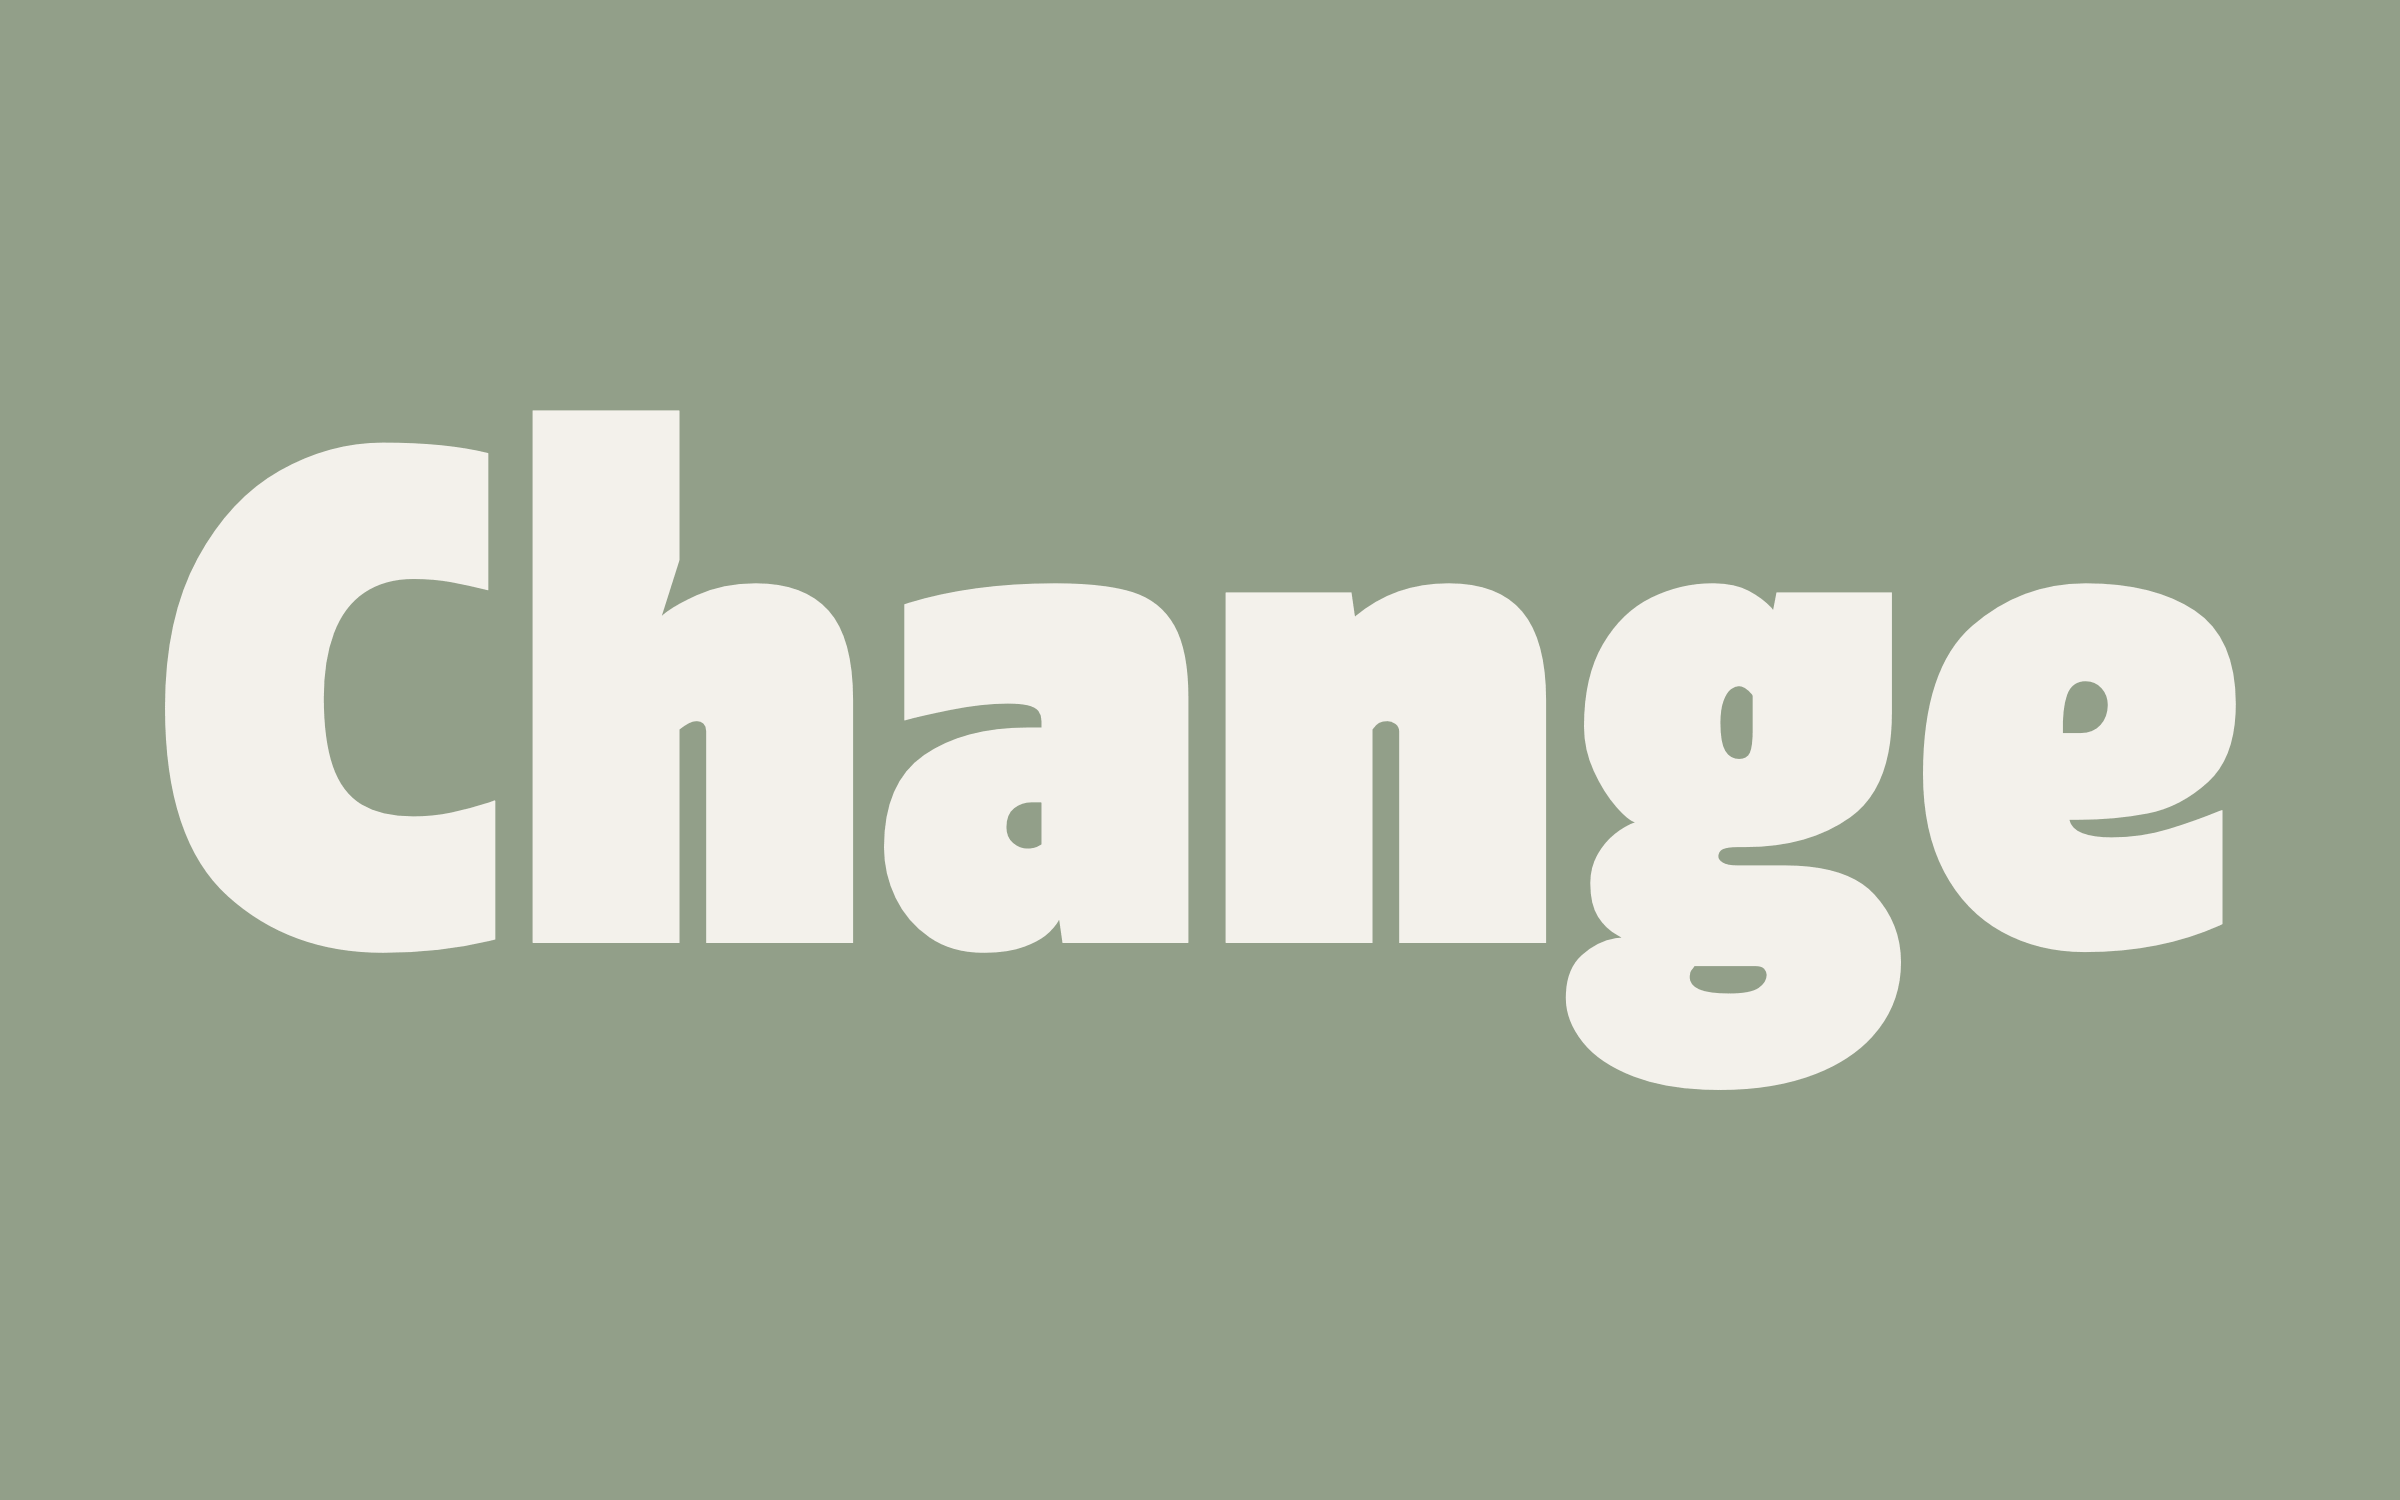 Introducing Change by Alessio Leonardi